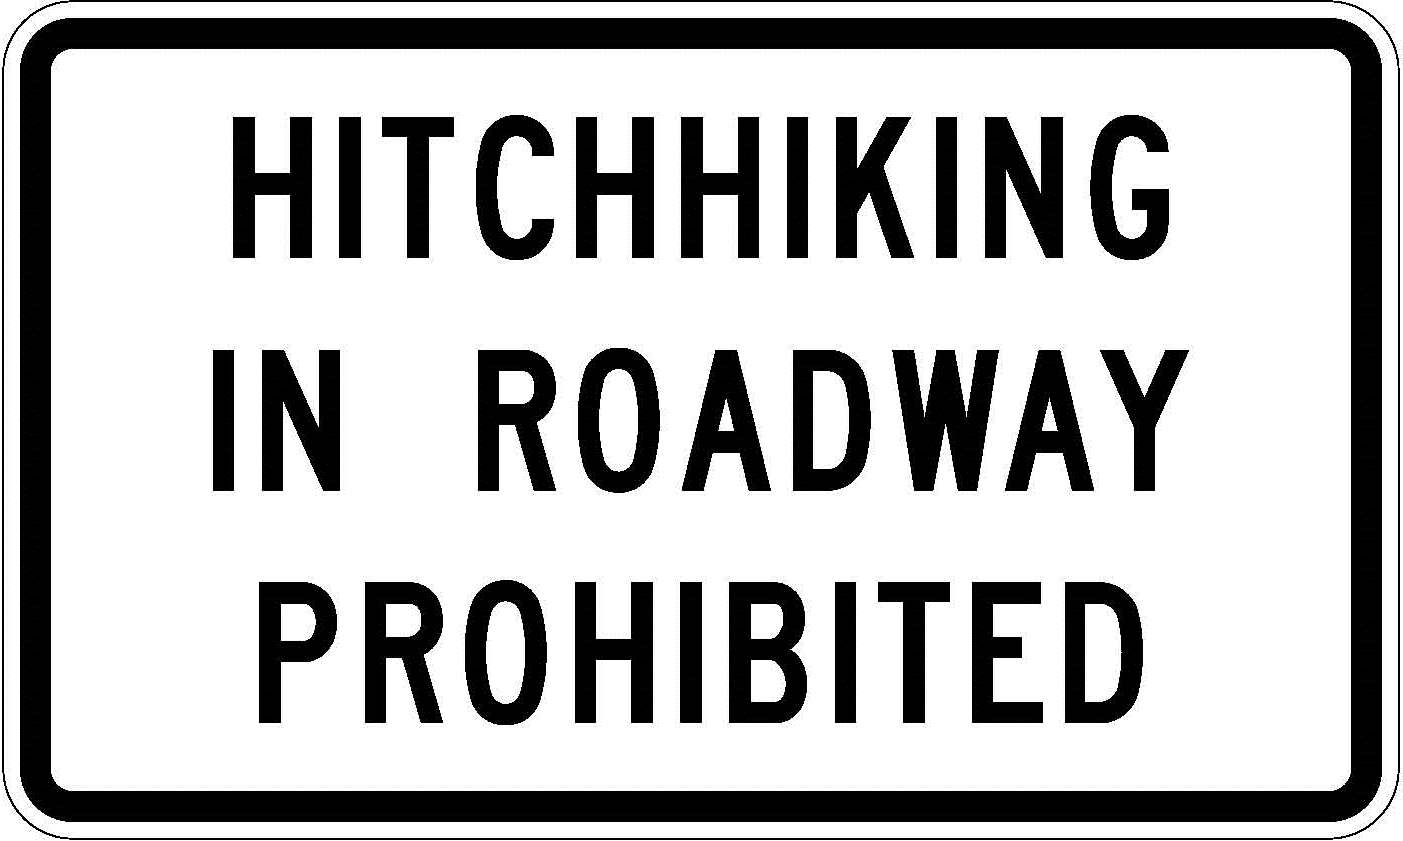 R9-4b Hitchhiking In Roadway Prohibited JPEG detail image